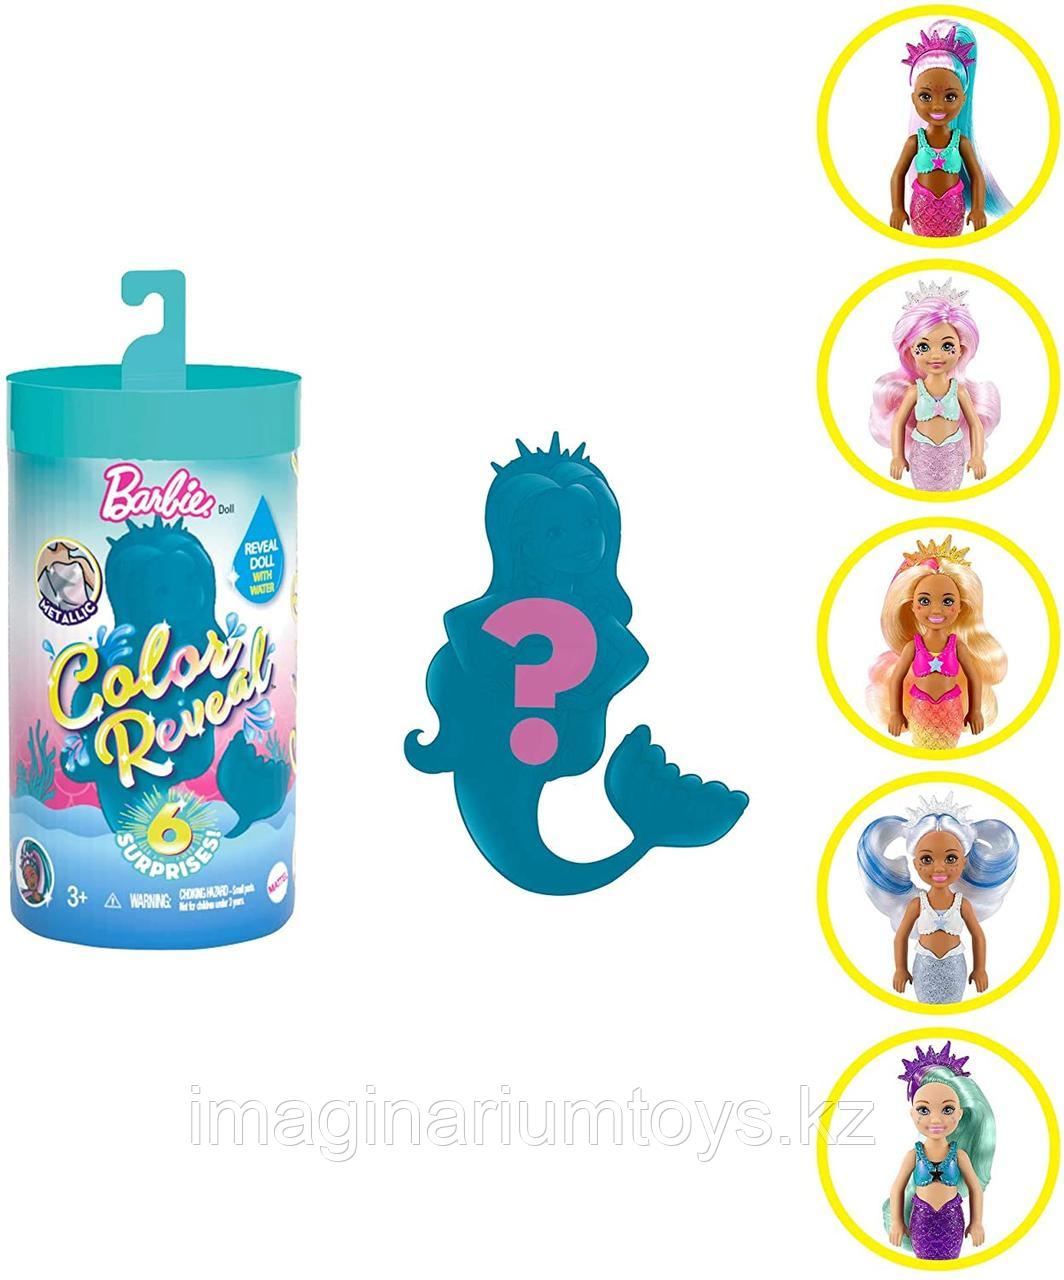 Кукла Челси русалка с водными сюрпризами Barbie Chelsea Color Reveal Mermaid, фото 1